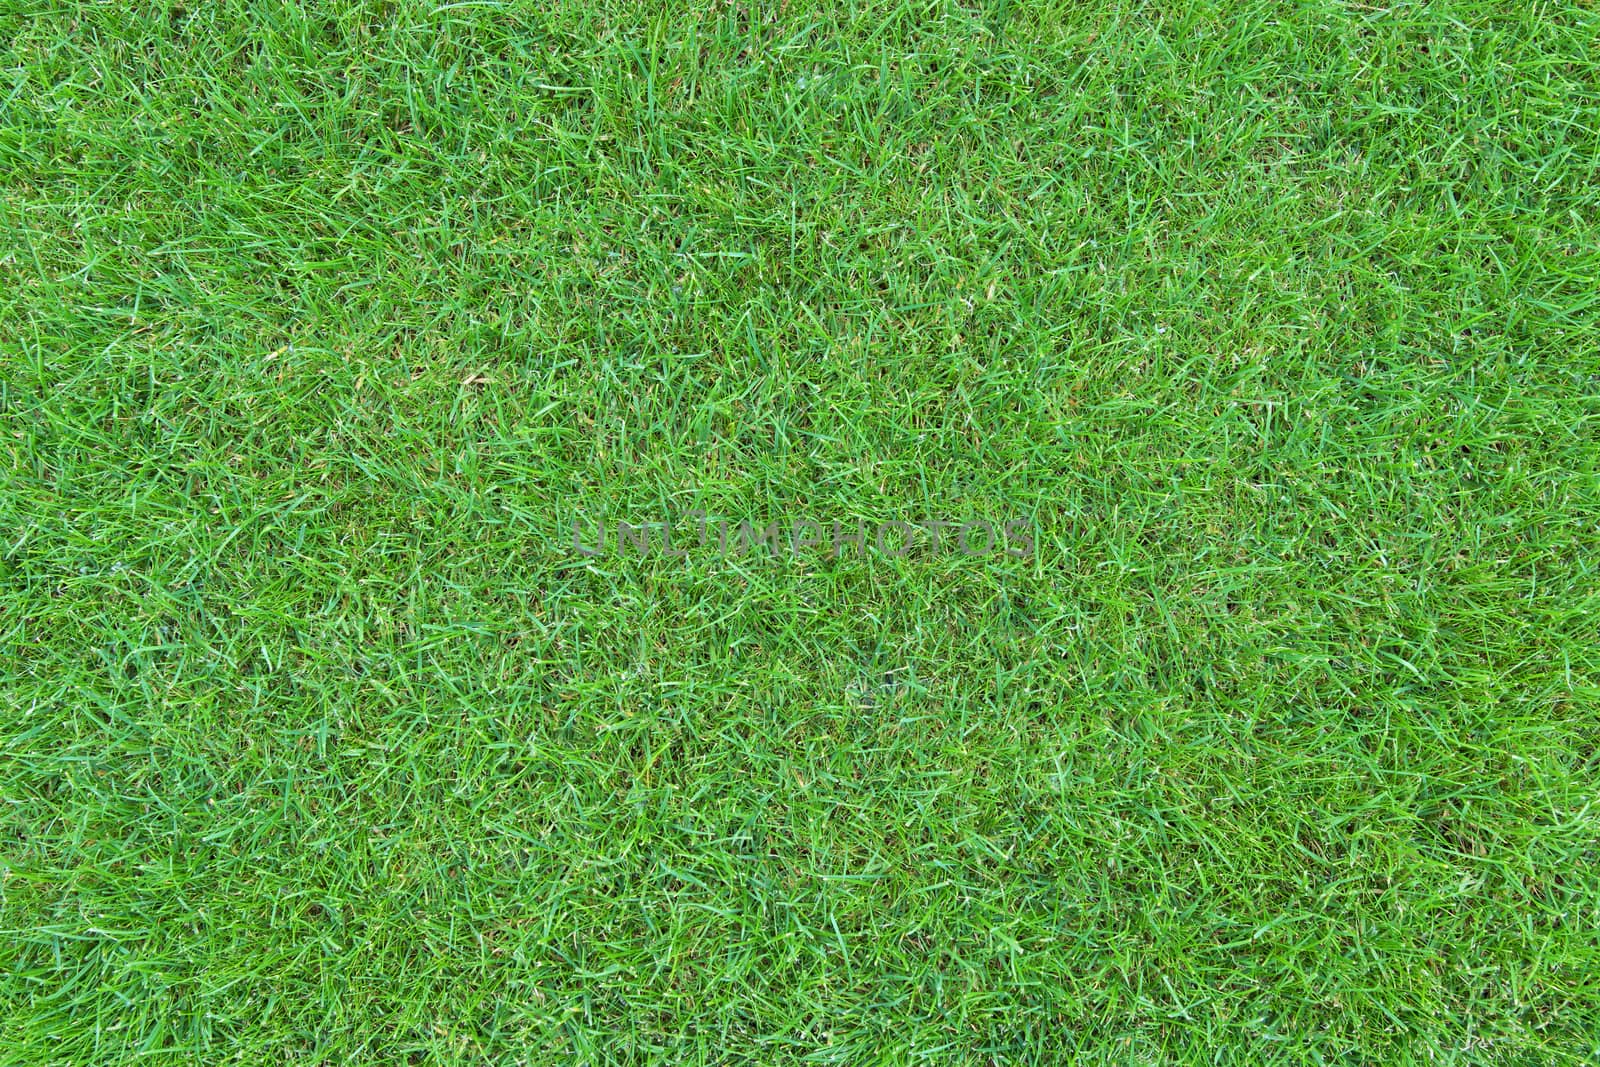 Green grass lawn by vkstudio